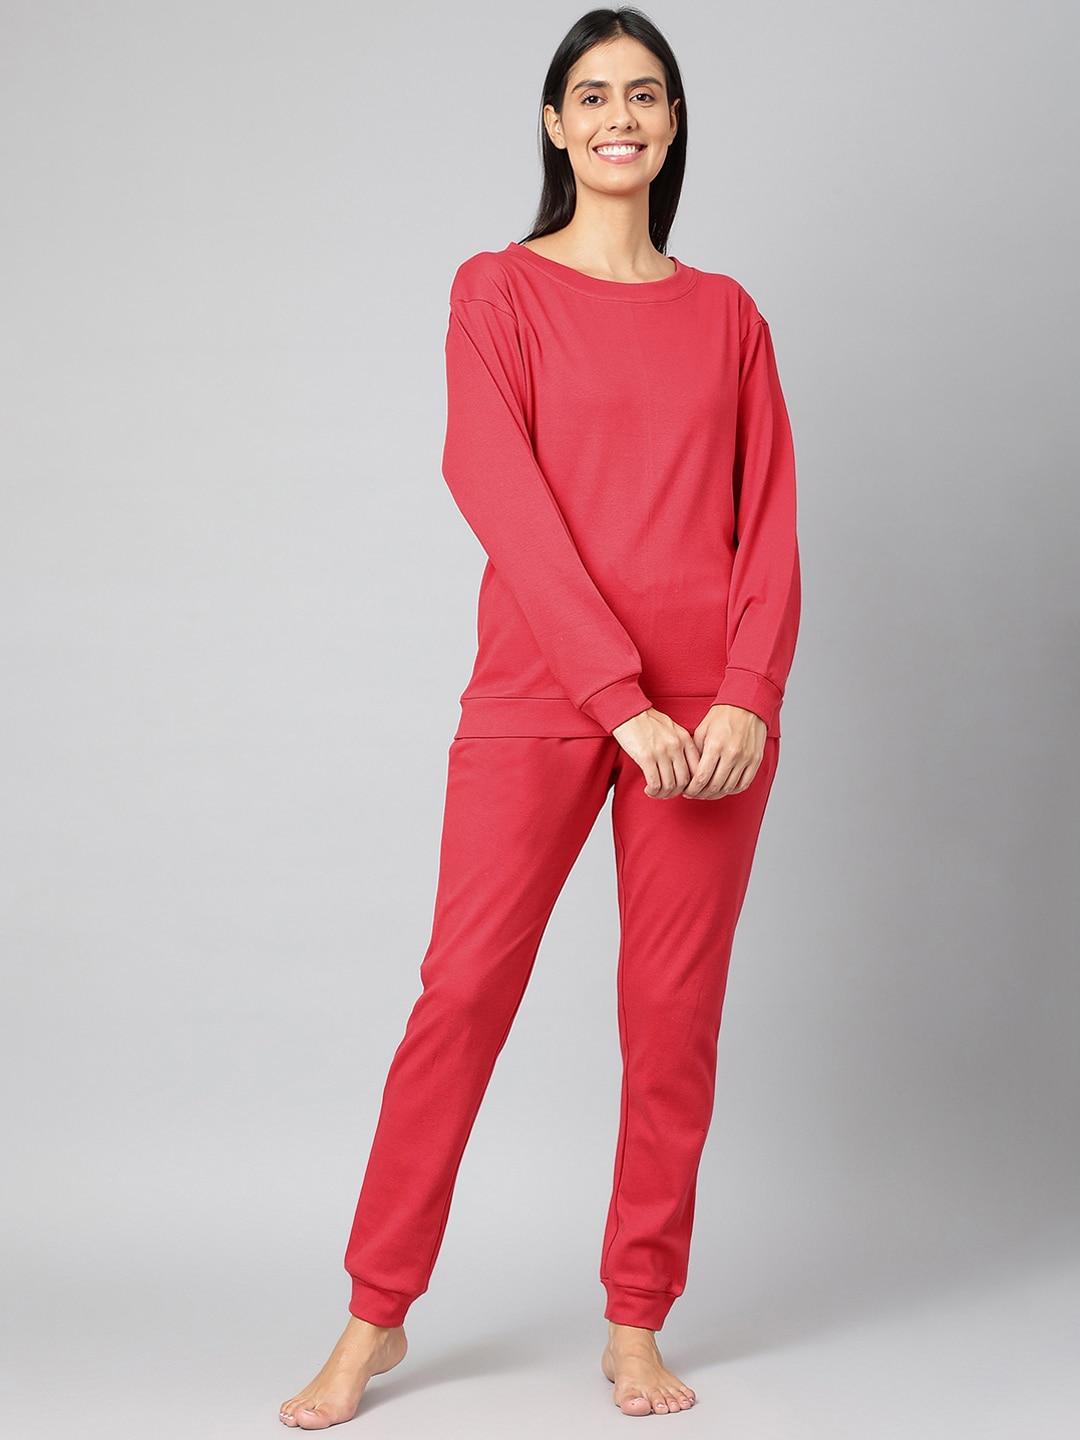 finsbury-london-women-red-solid-loungewear-co-ords